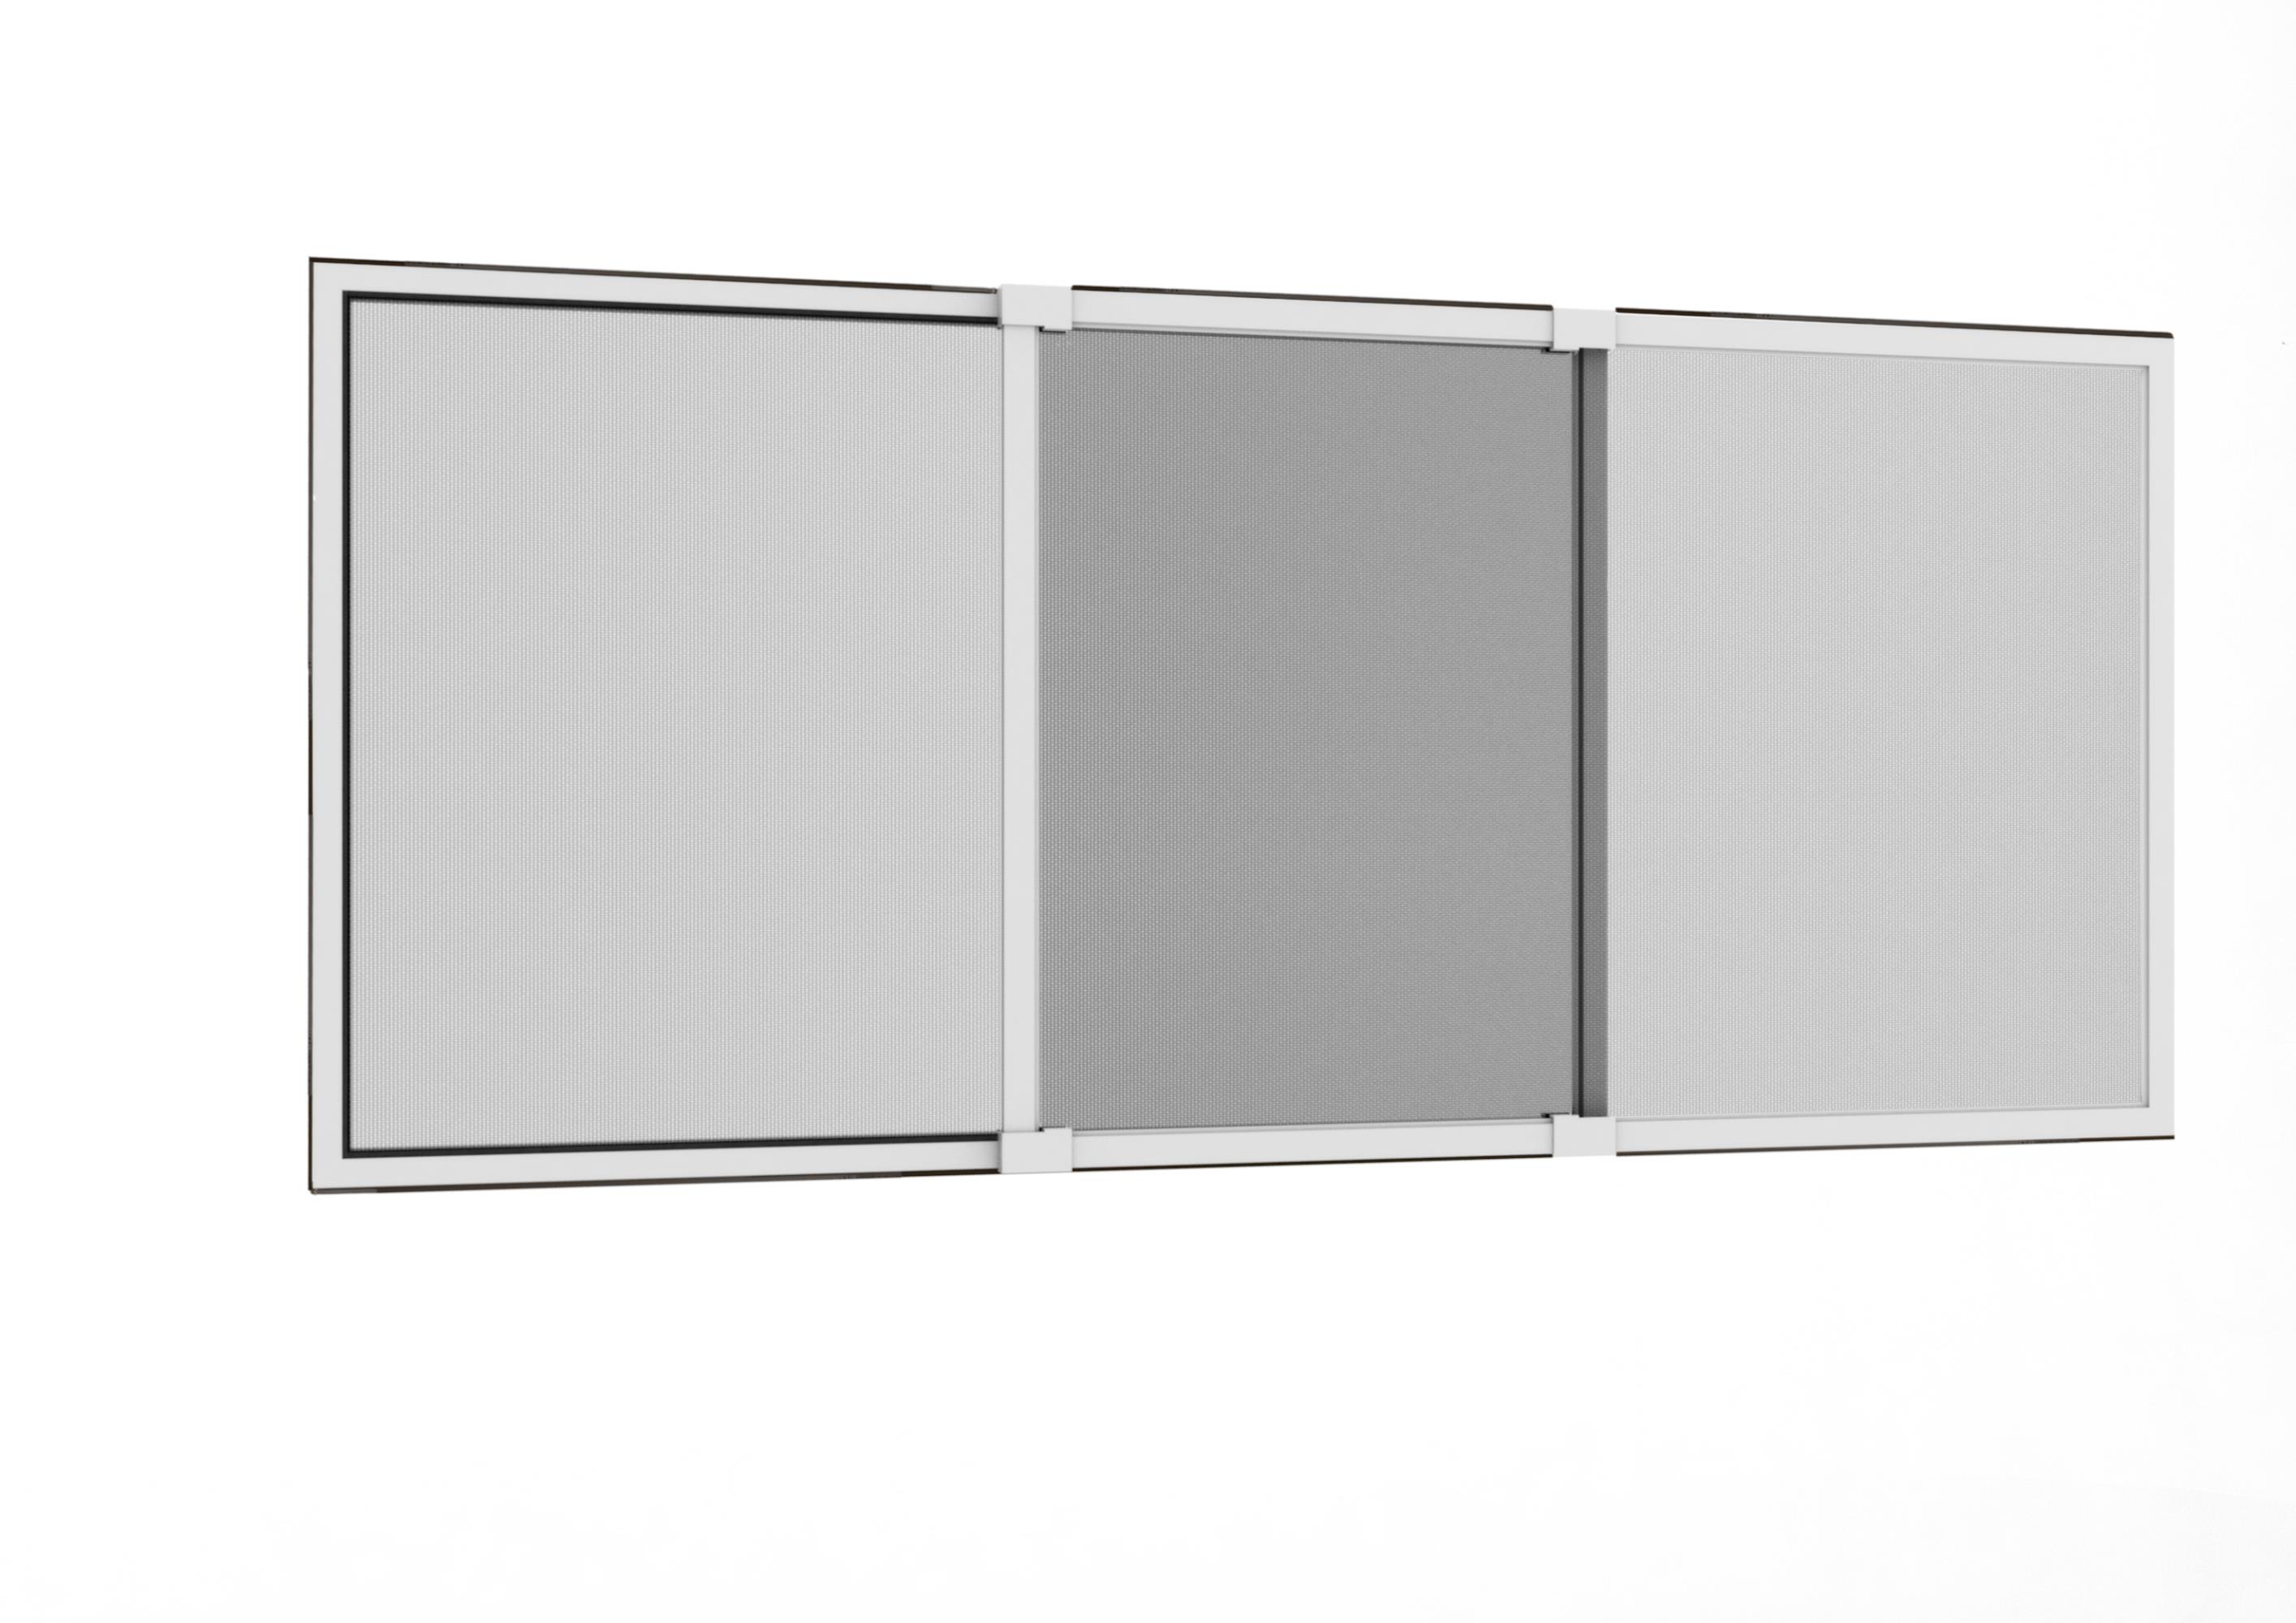 Alu-Schiebefenster "Comfy Slide" 75x100 cm in Anthrazit